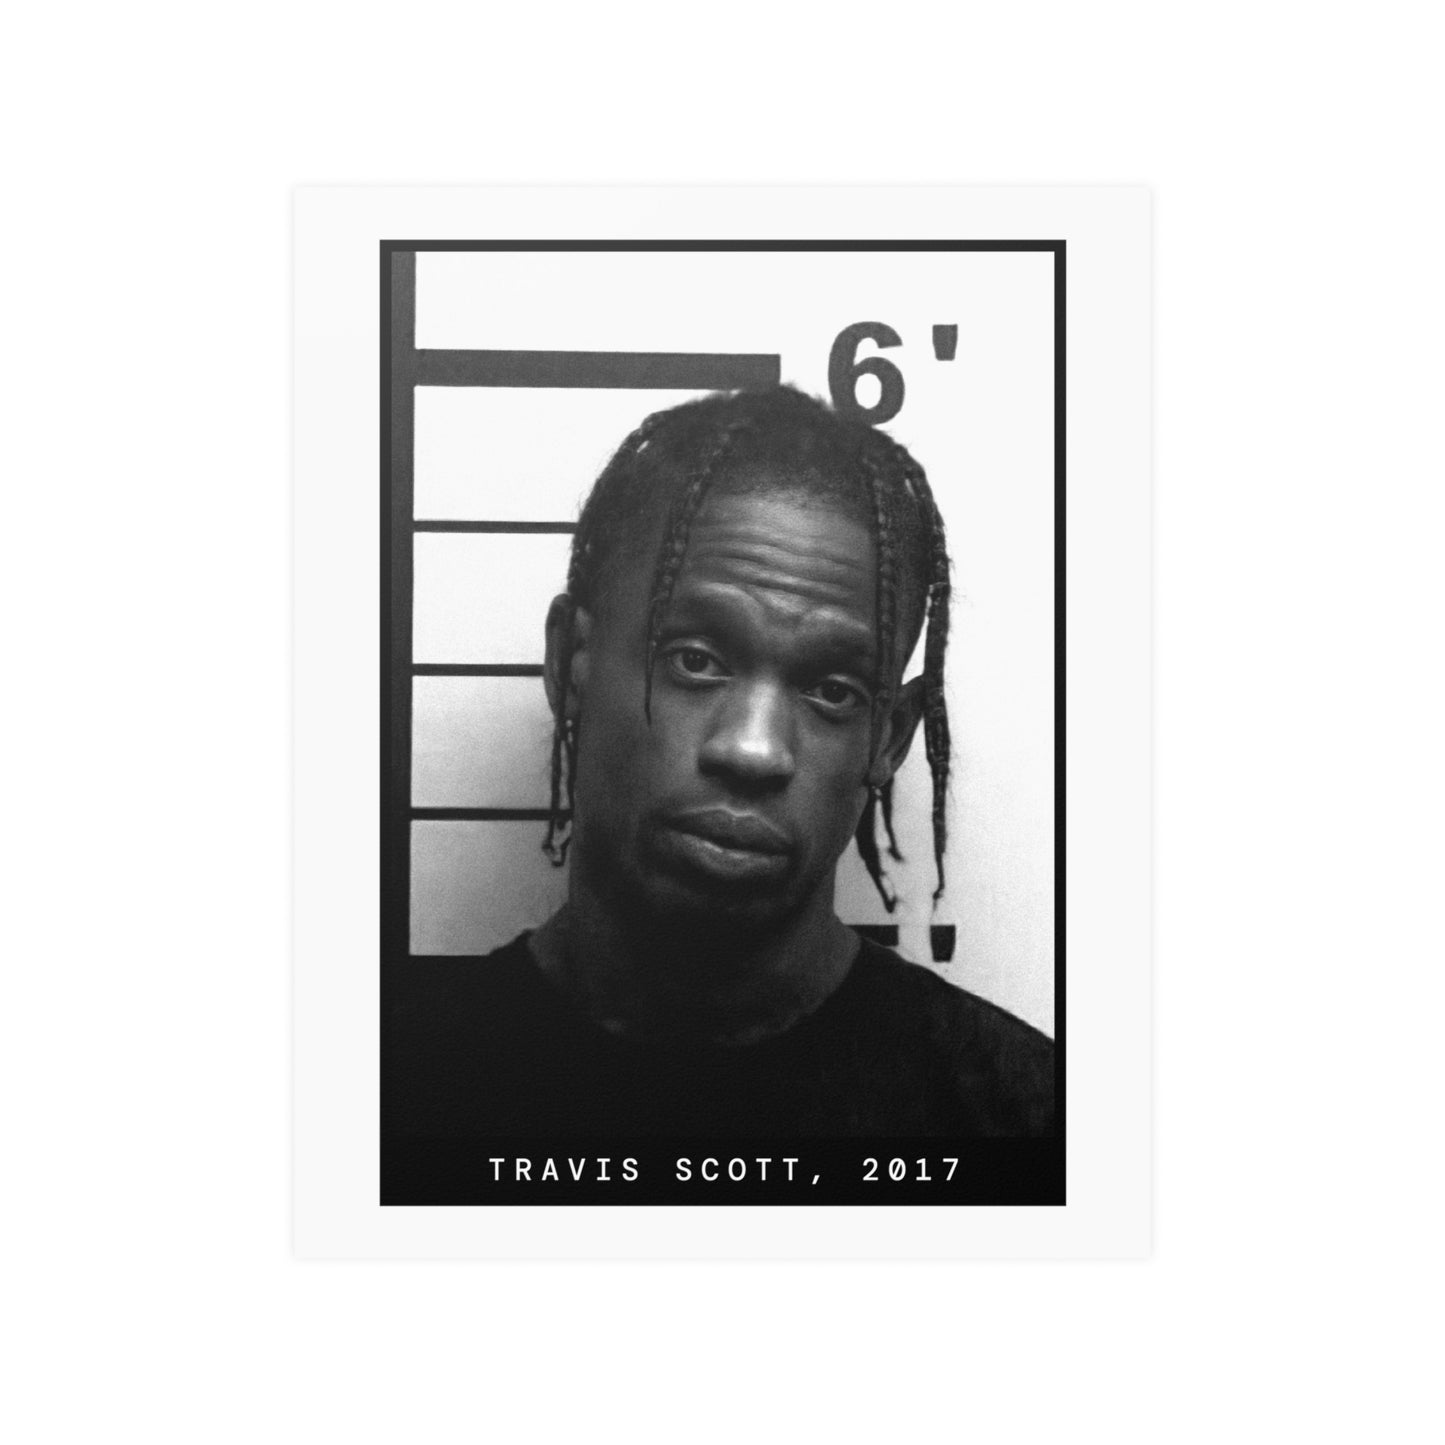 Travis Scott, 2017 Rapper Mugshot Poster